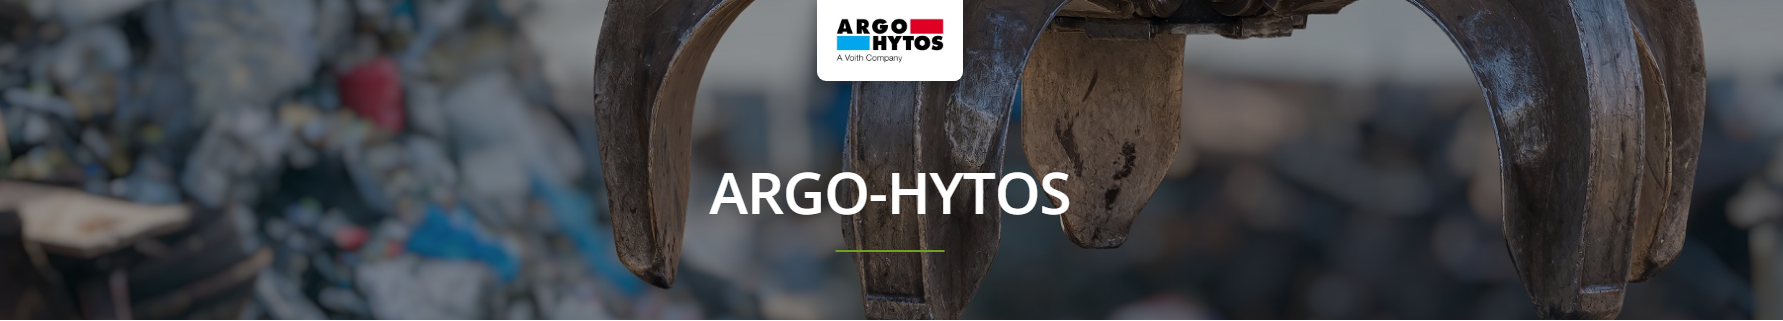 Argo-Hytos Filtration